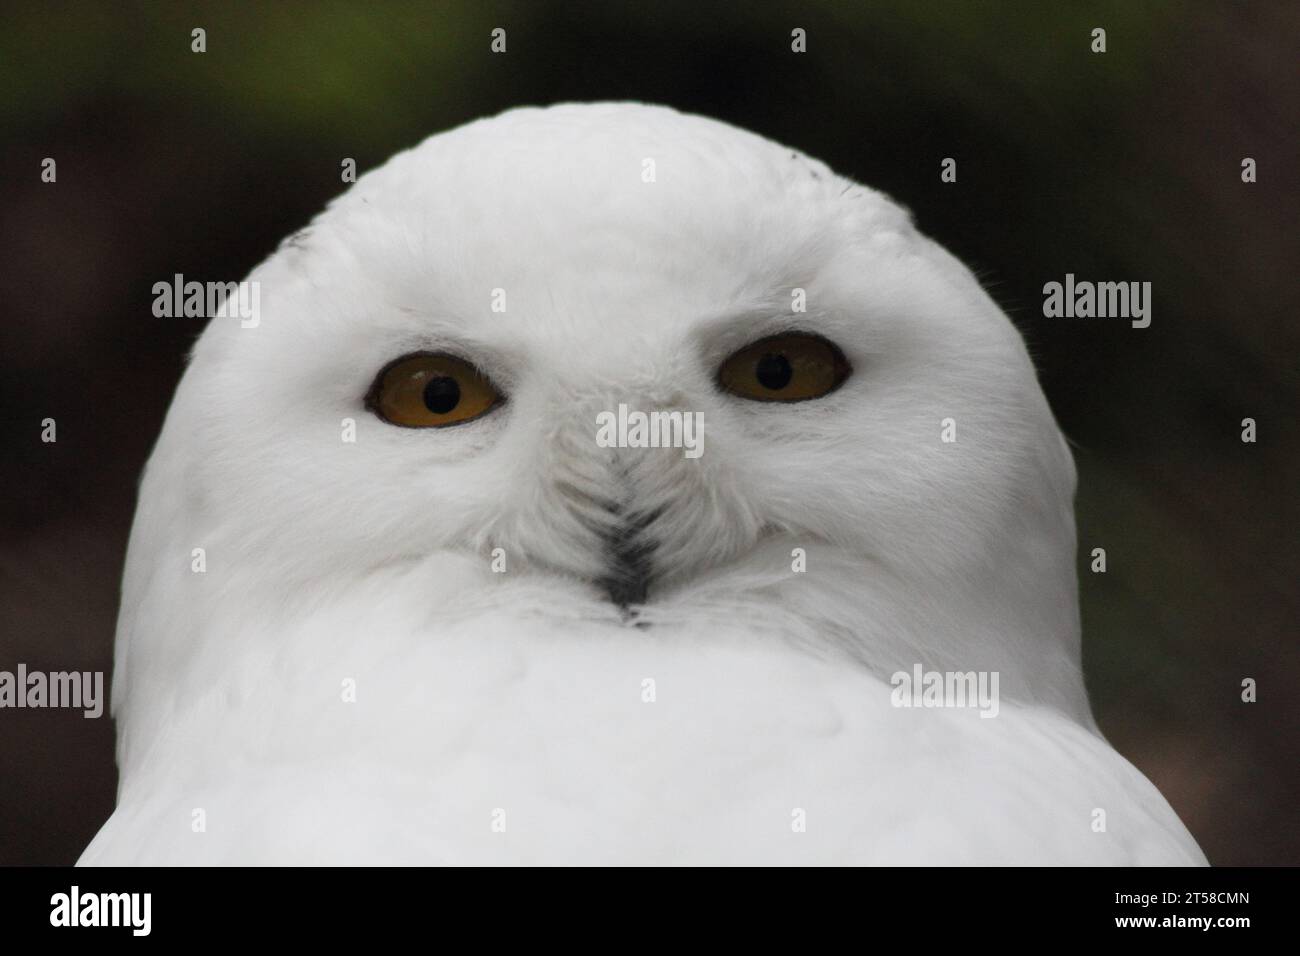 a portrait shot of a snowy owl, (Nyctea scandiaca) Stock Photo